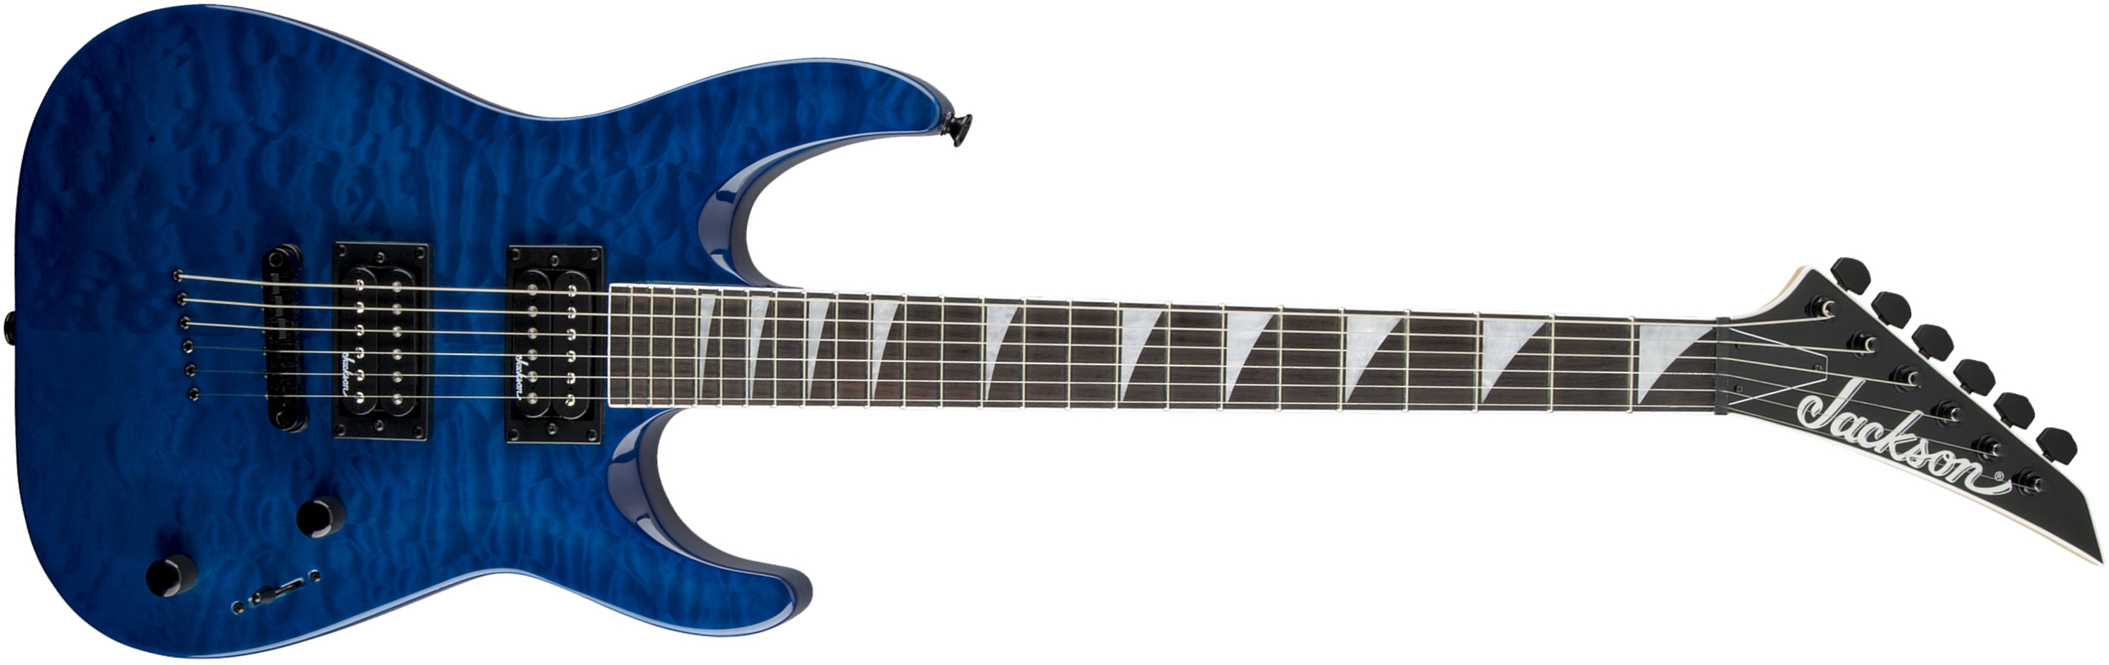 Jackson Dinky Arch Top Js32tq Dka  Hh Ht Ama - Transparent Blue - Metal electric guitar - Main picture